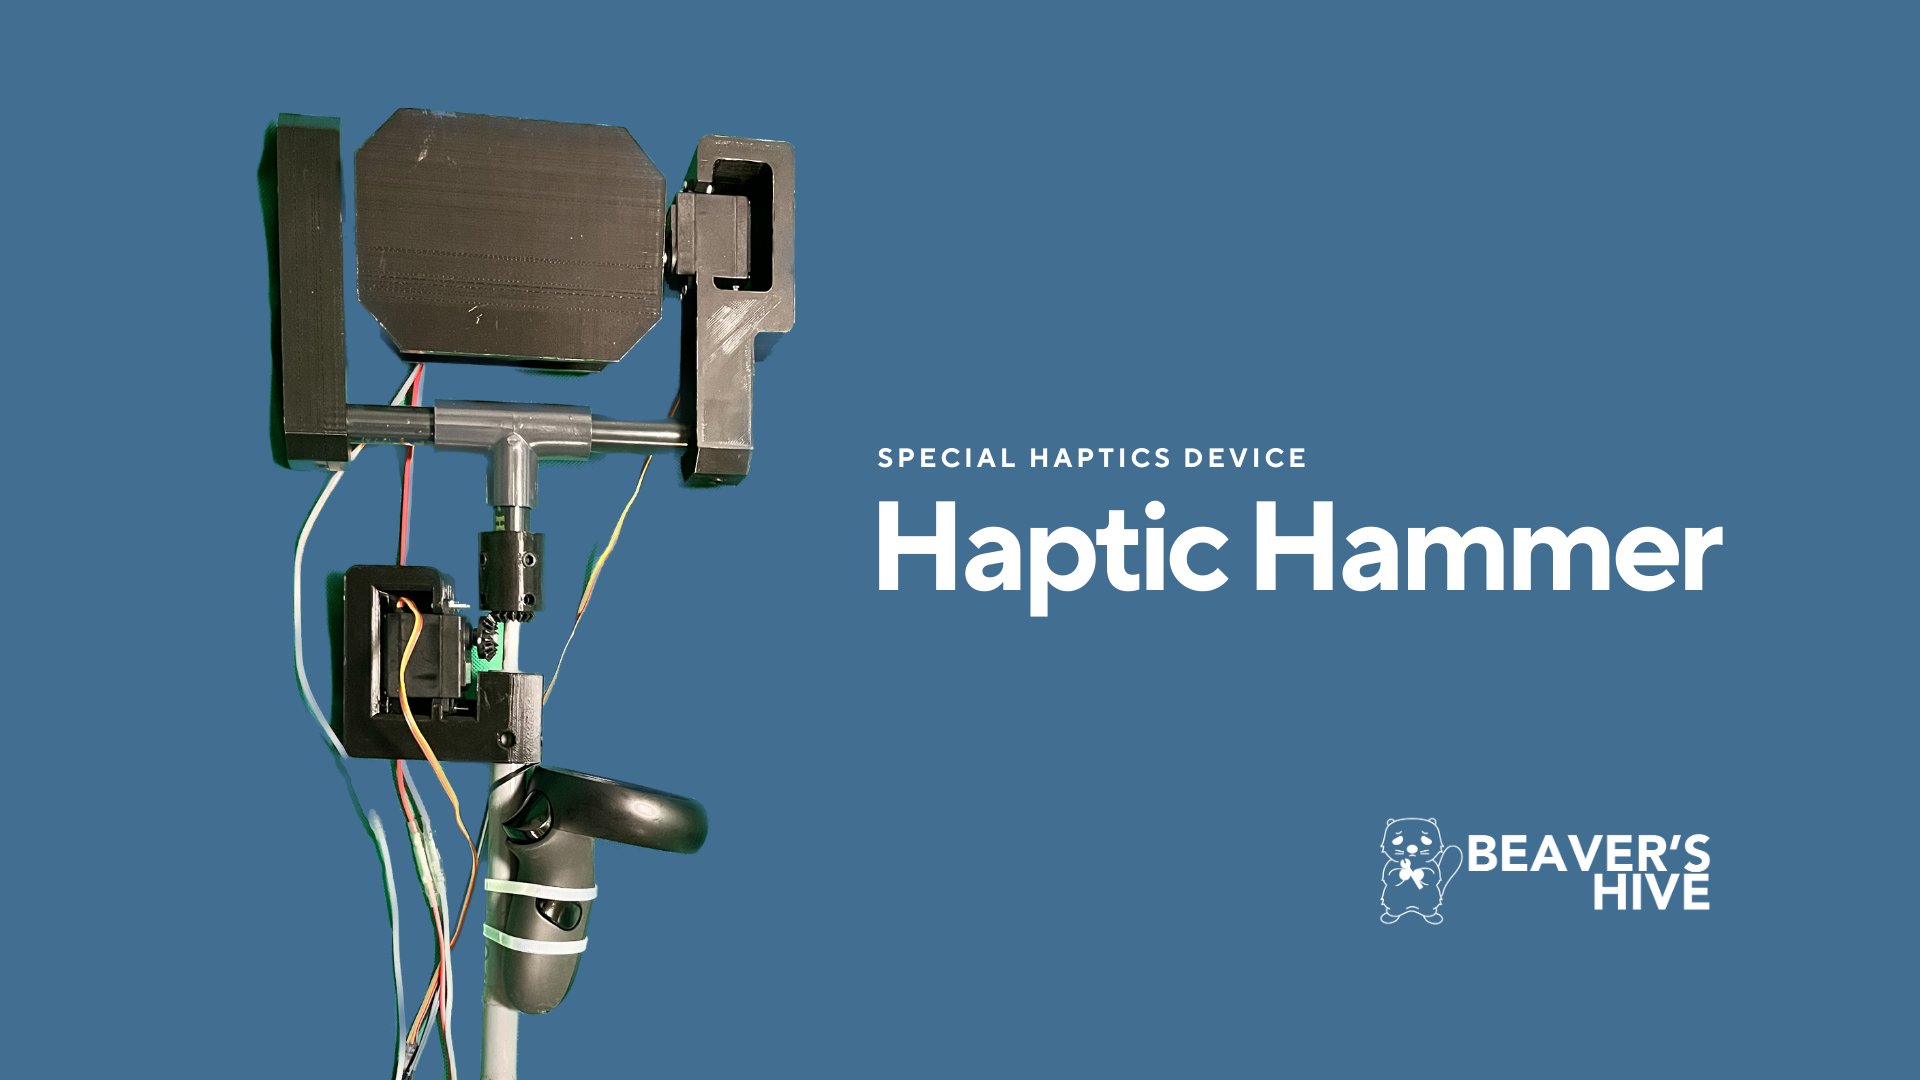 HapticHammer